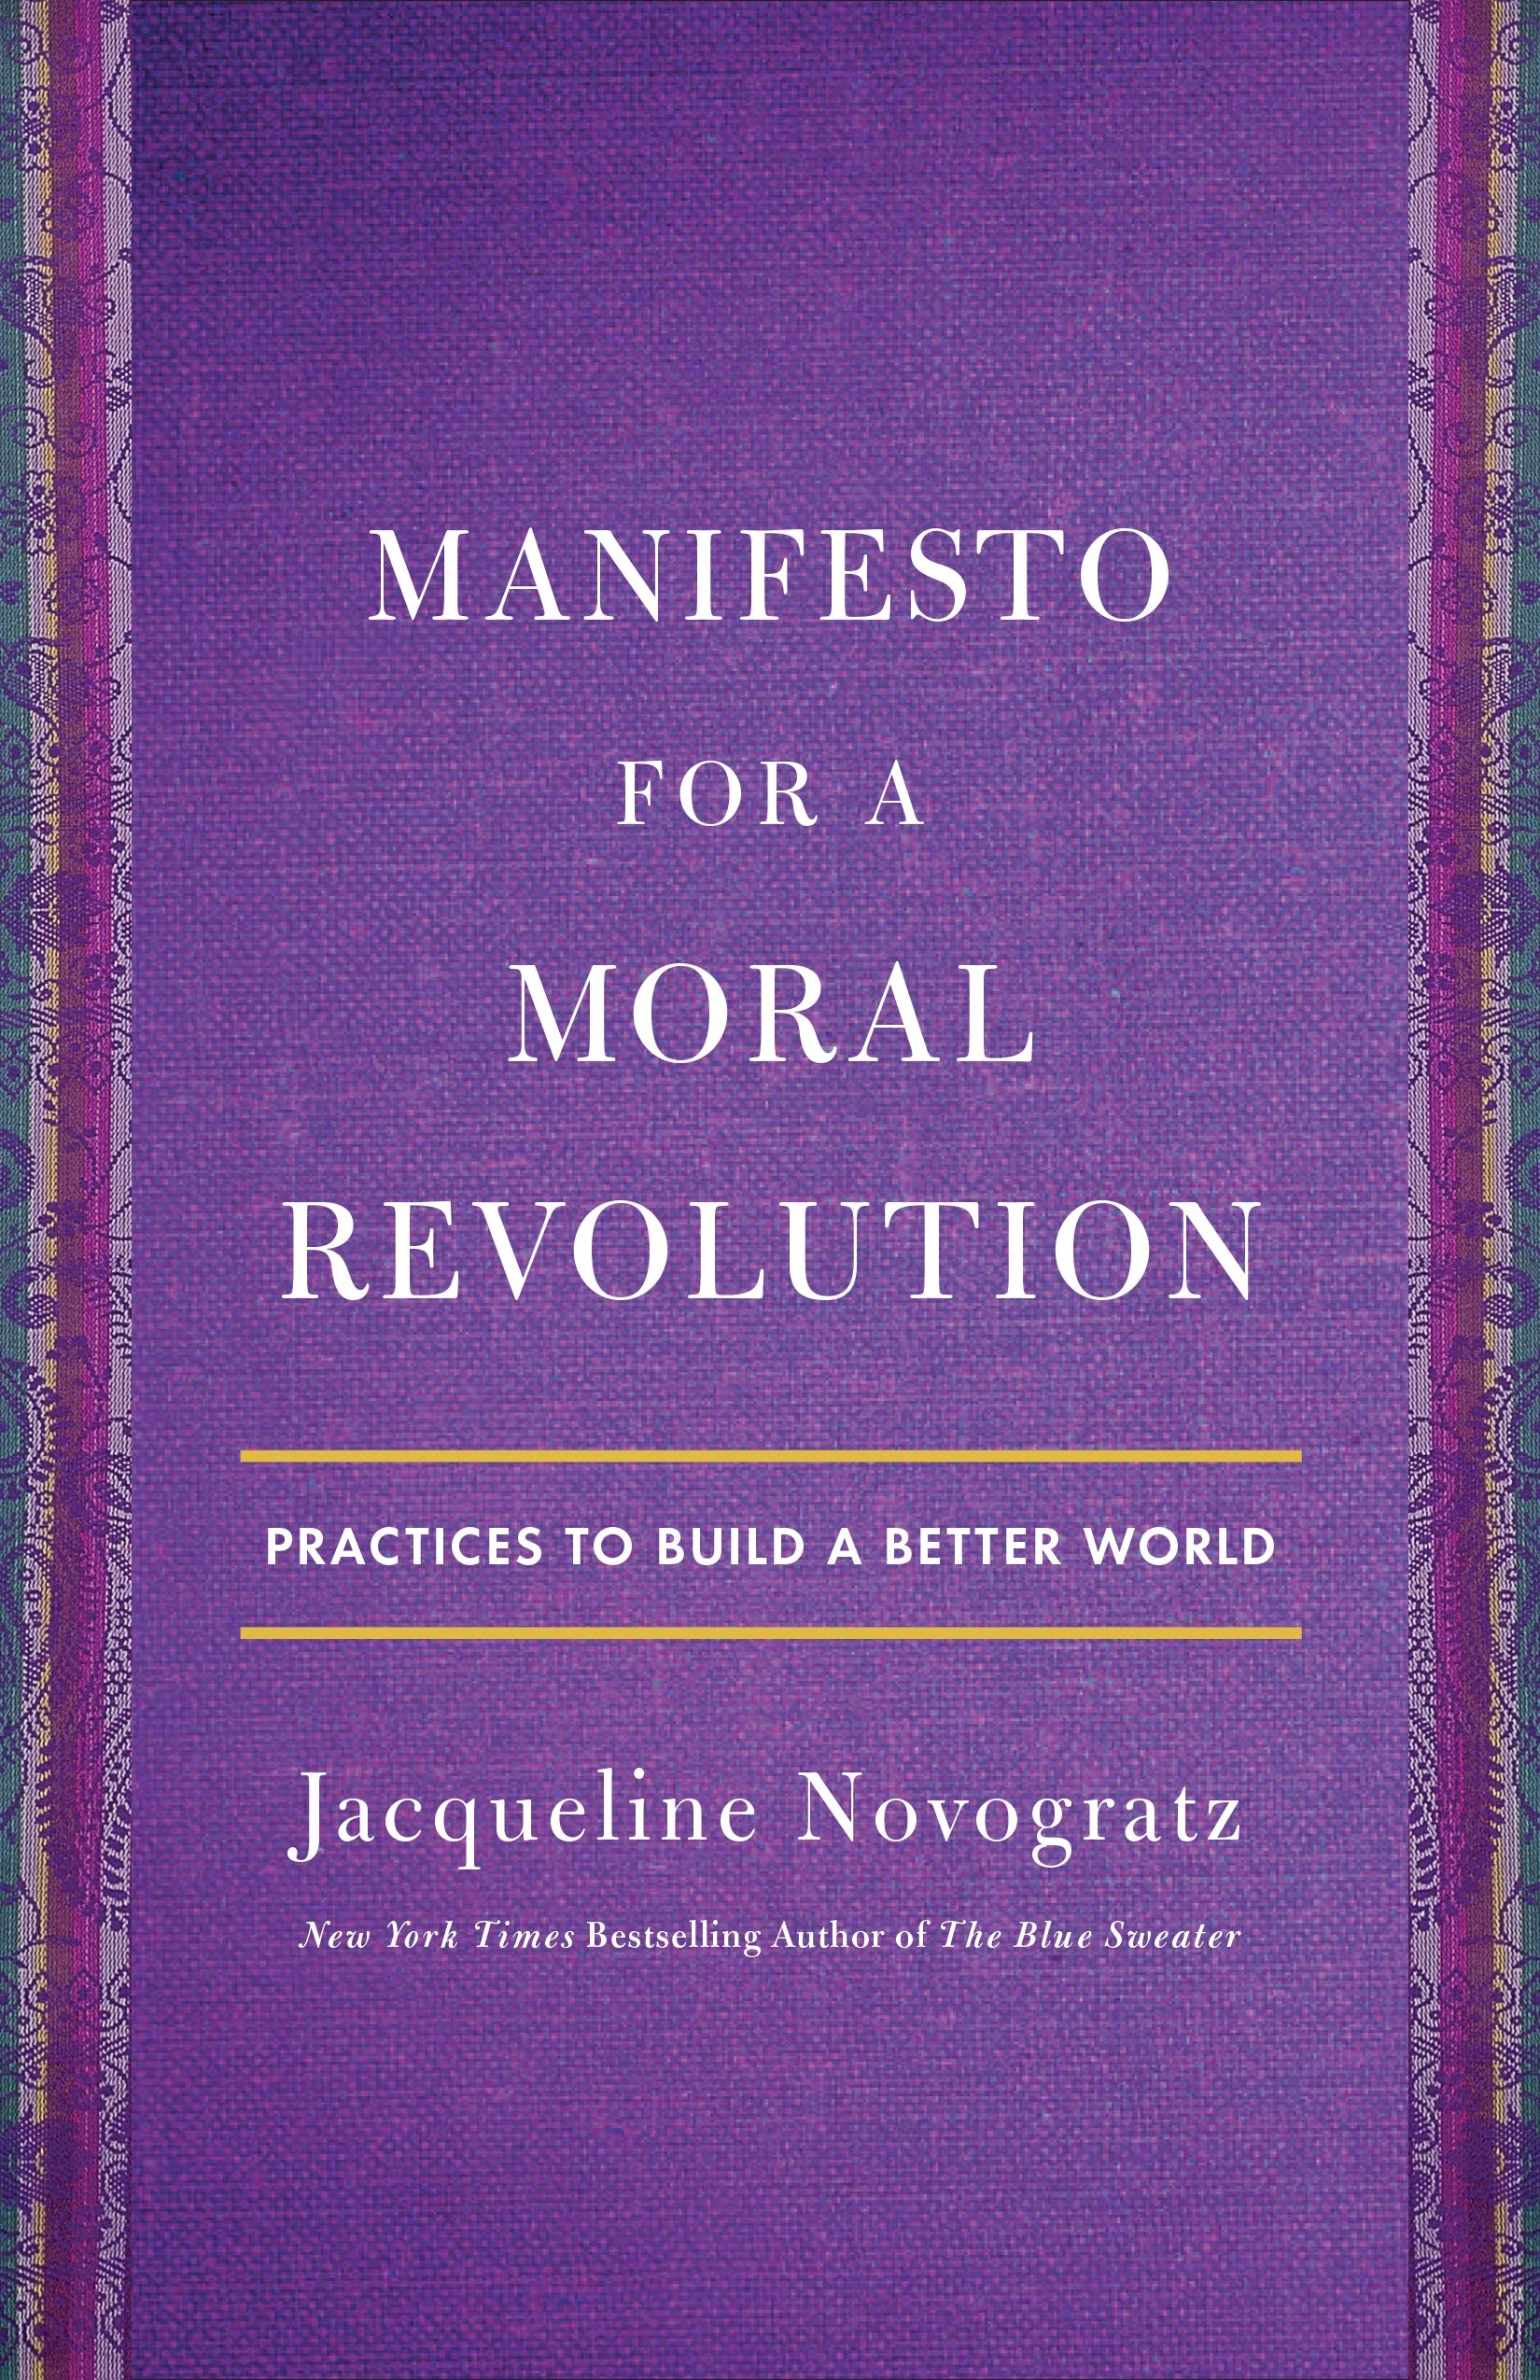 Manifesto for a moral revolution